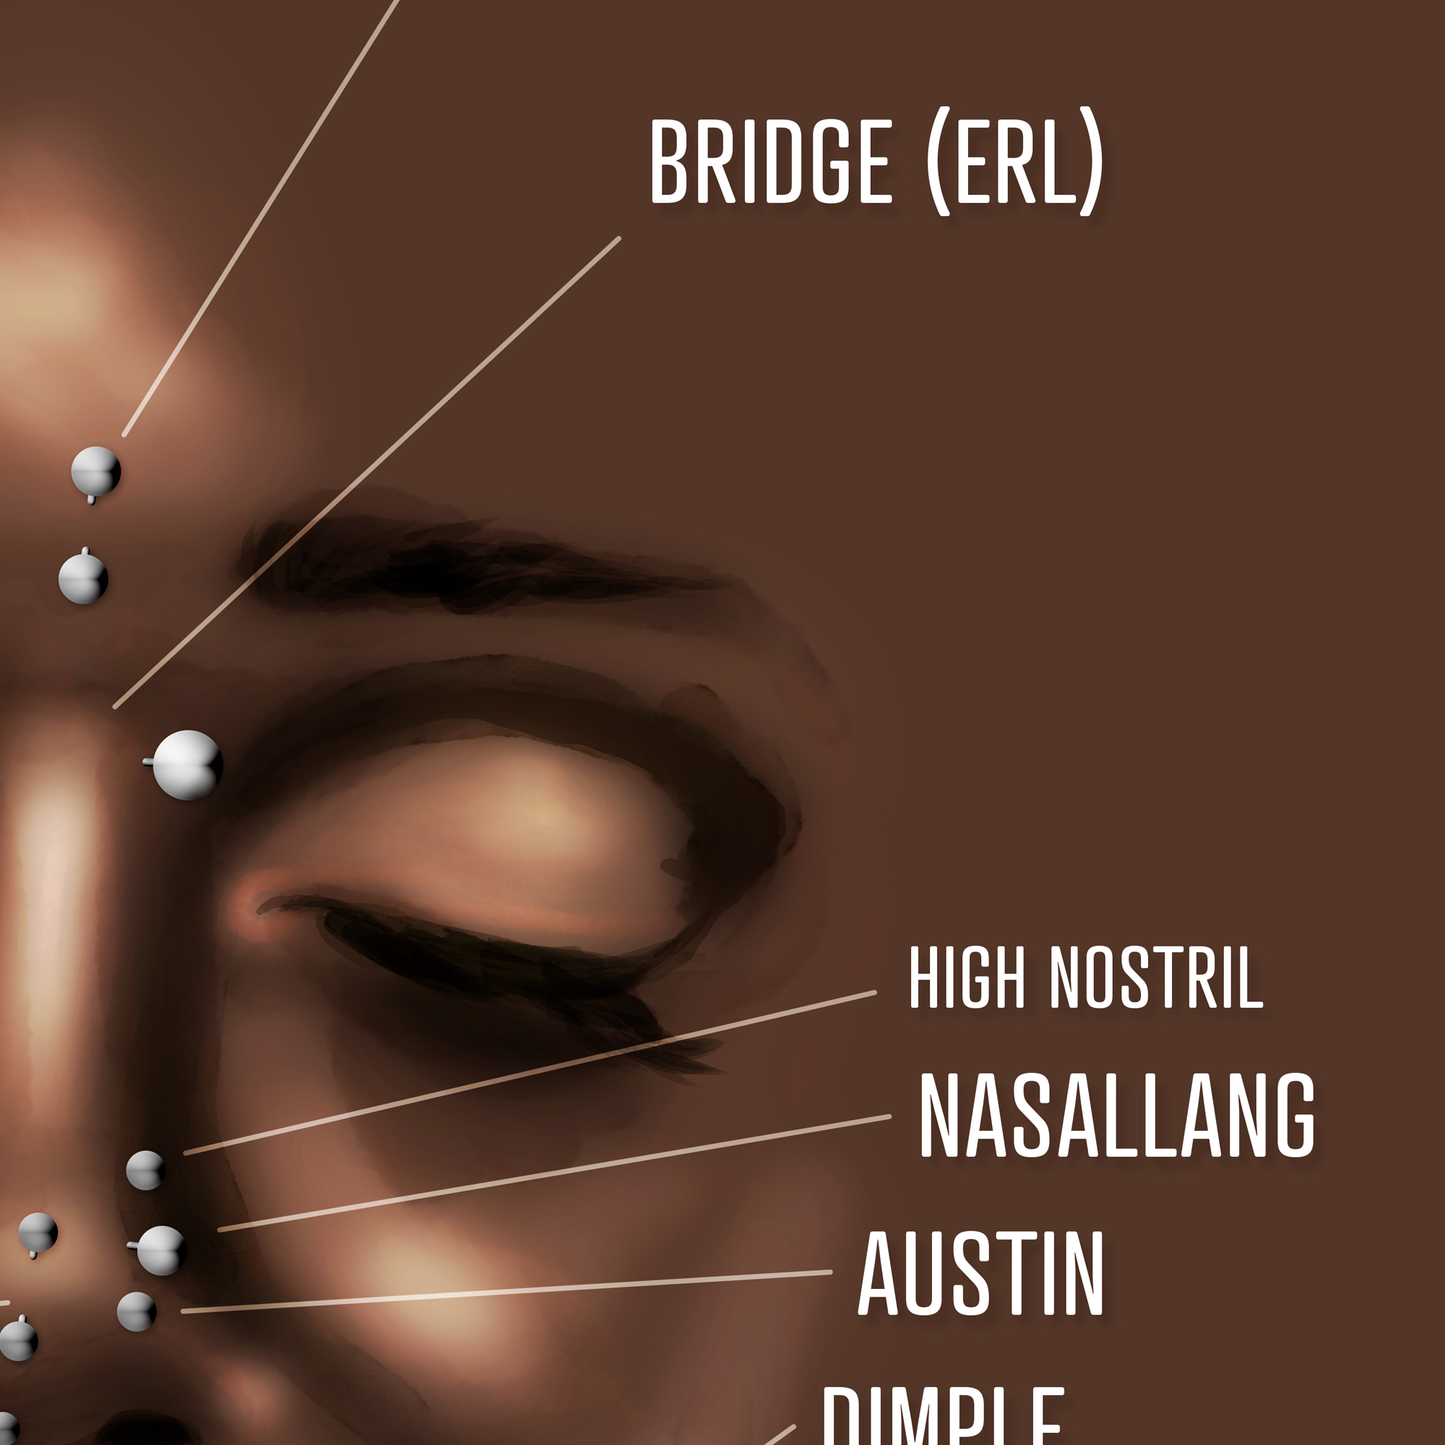 Facial Piercing Chart